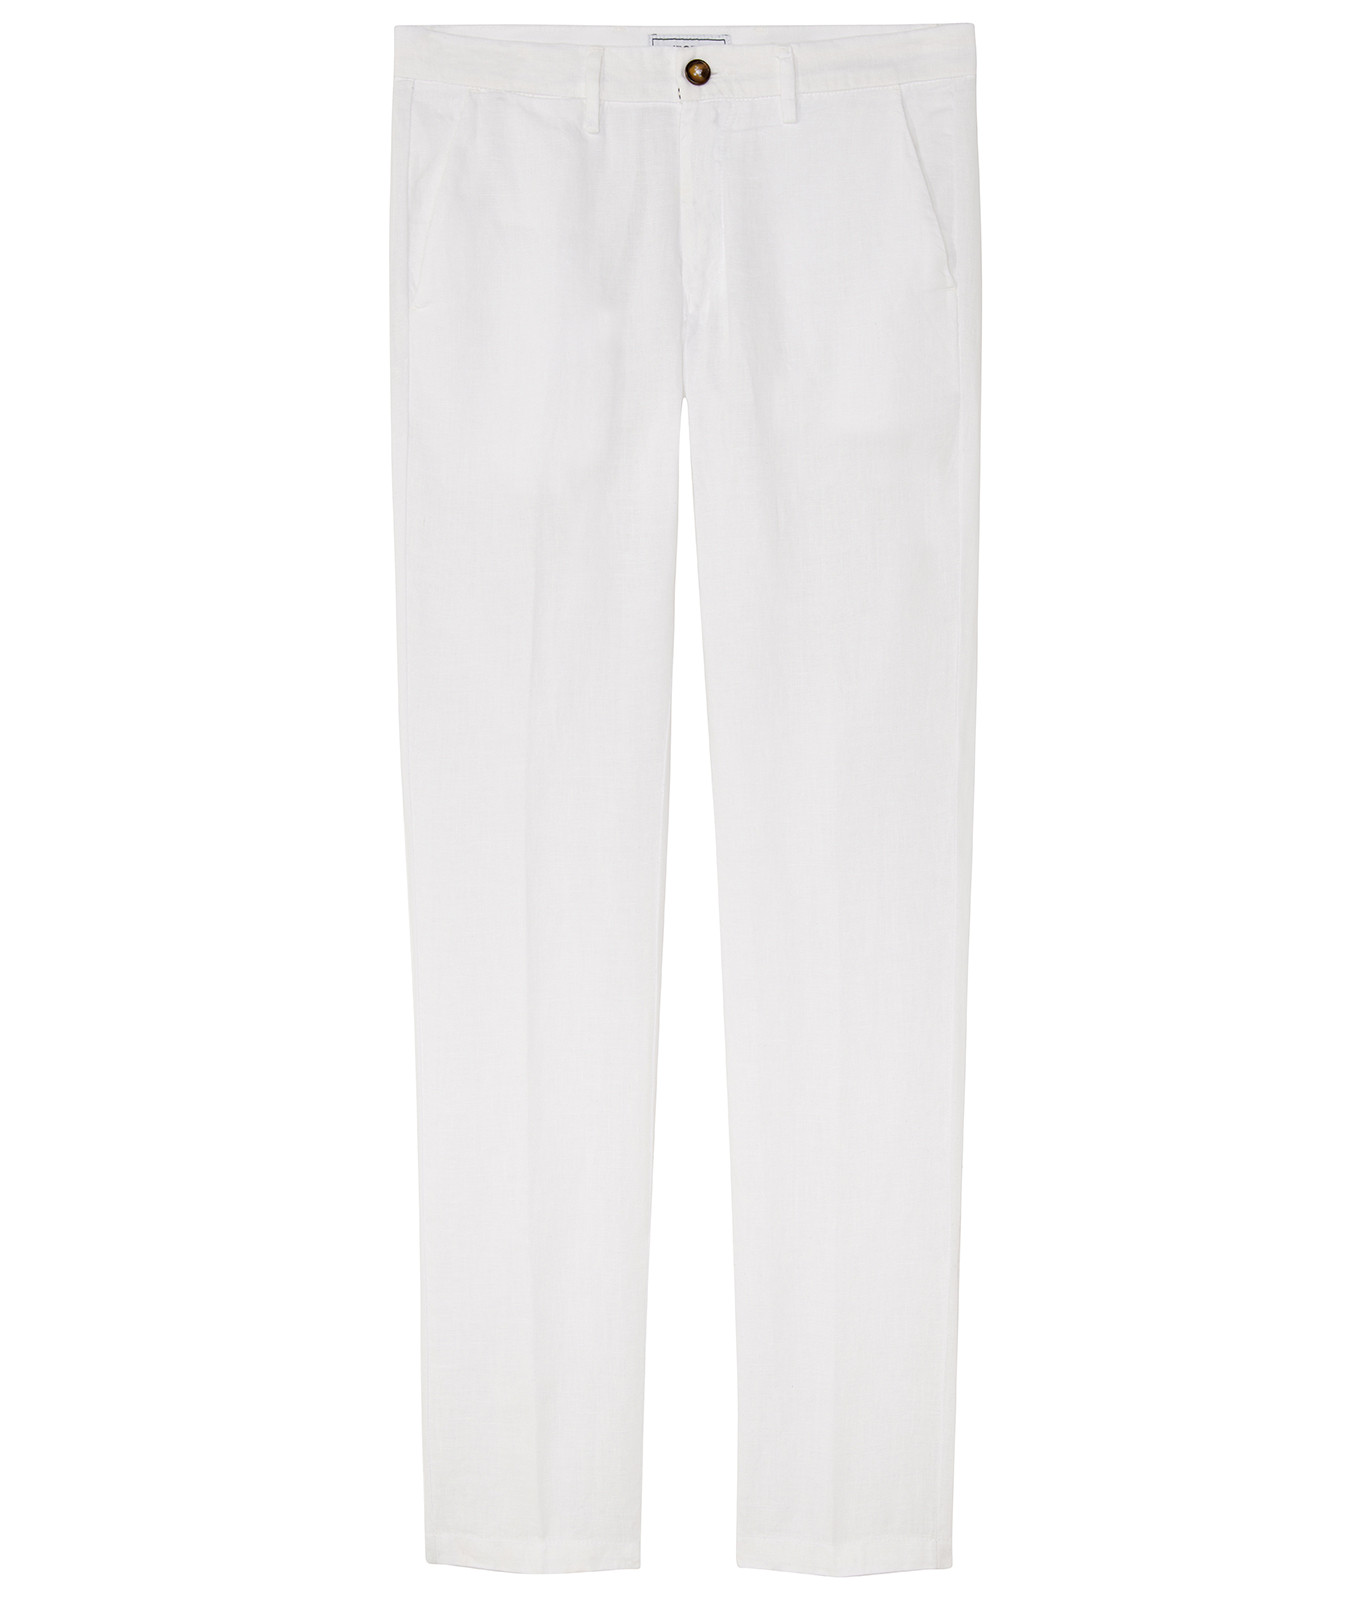 Pantalon en lin pour homme avec plis, pantalon de jogging en lin blanc,  pantalon pour homme, pantalon ample, pantalon ample -  France